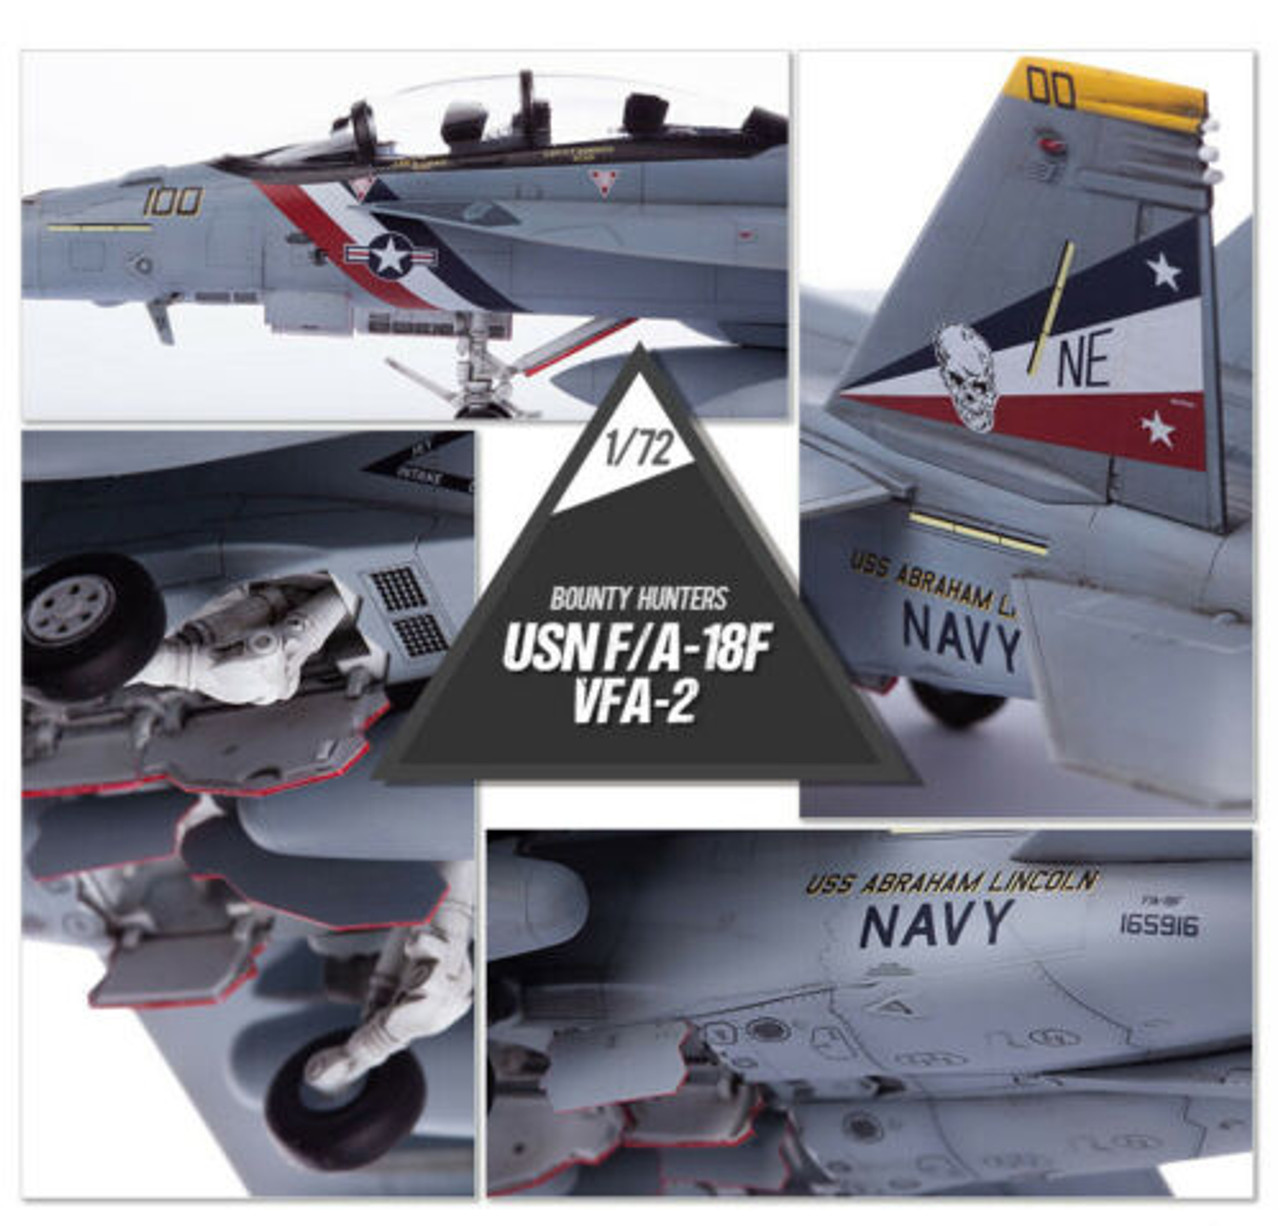 1/72 F/A-18F VFA-2 BOUNTY HUNTERS USN - 12567